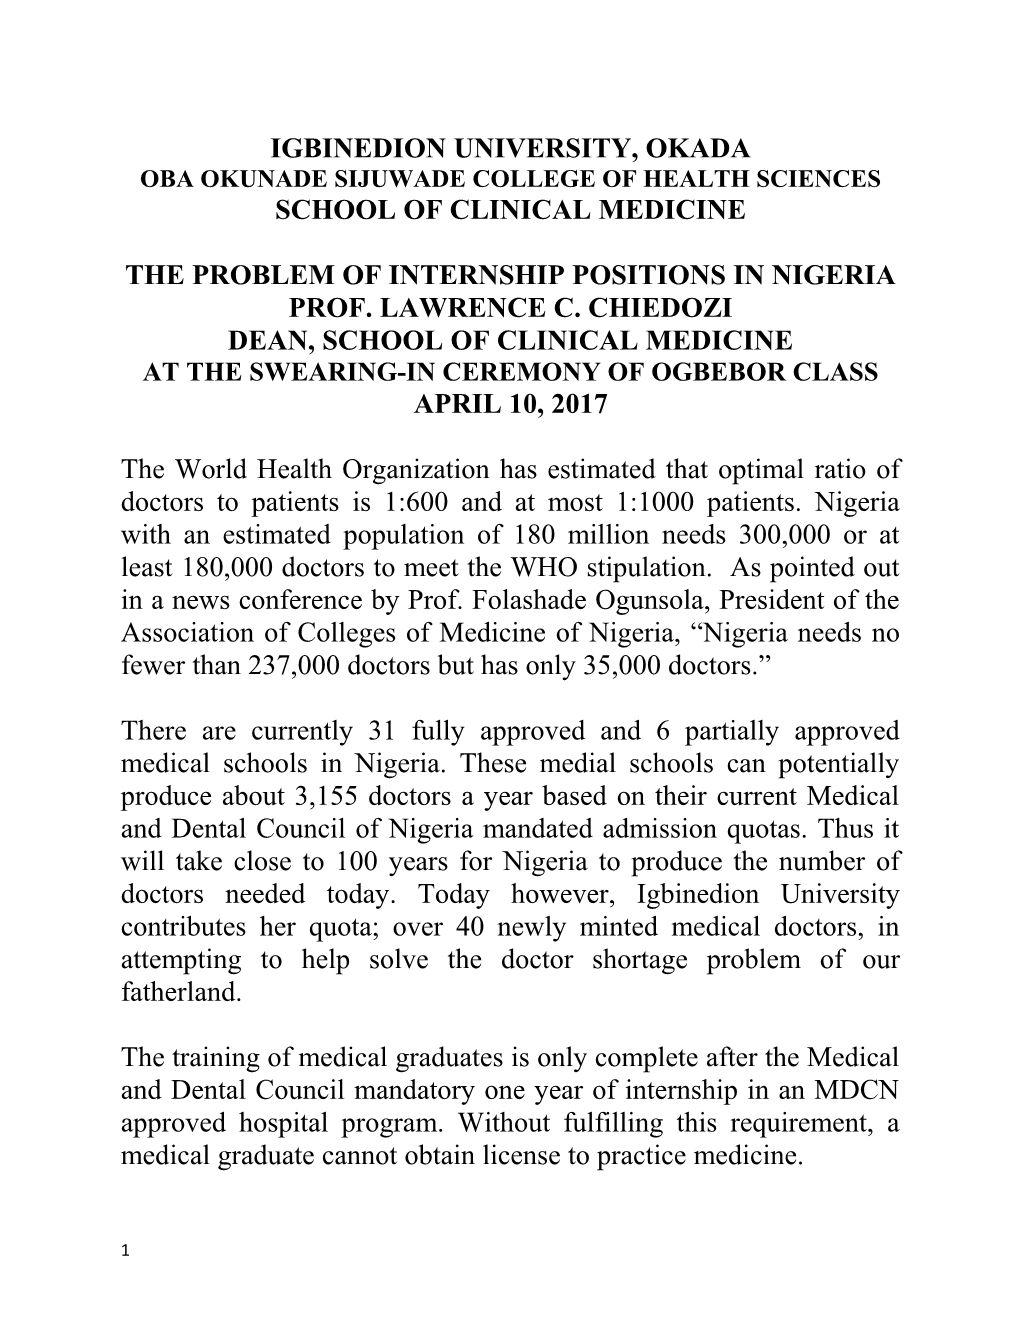 Oba Okunade Sijuwade College of Health Sciences